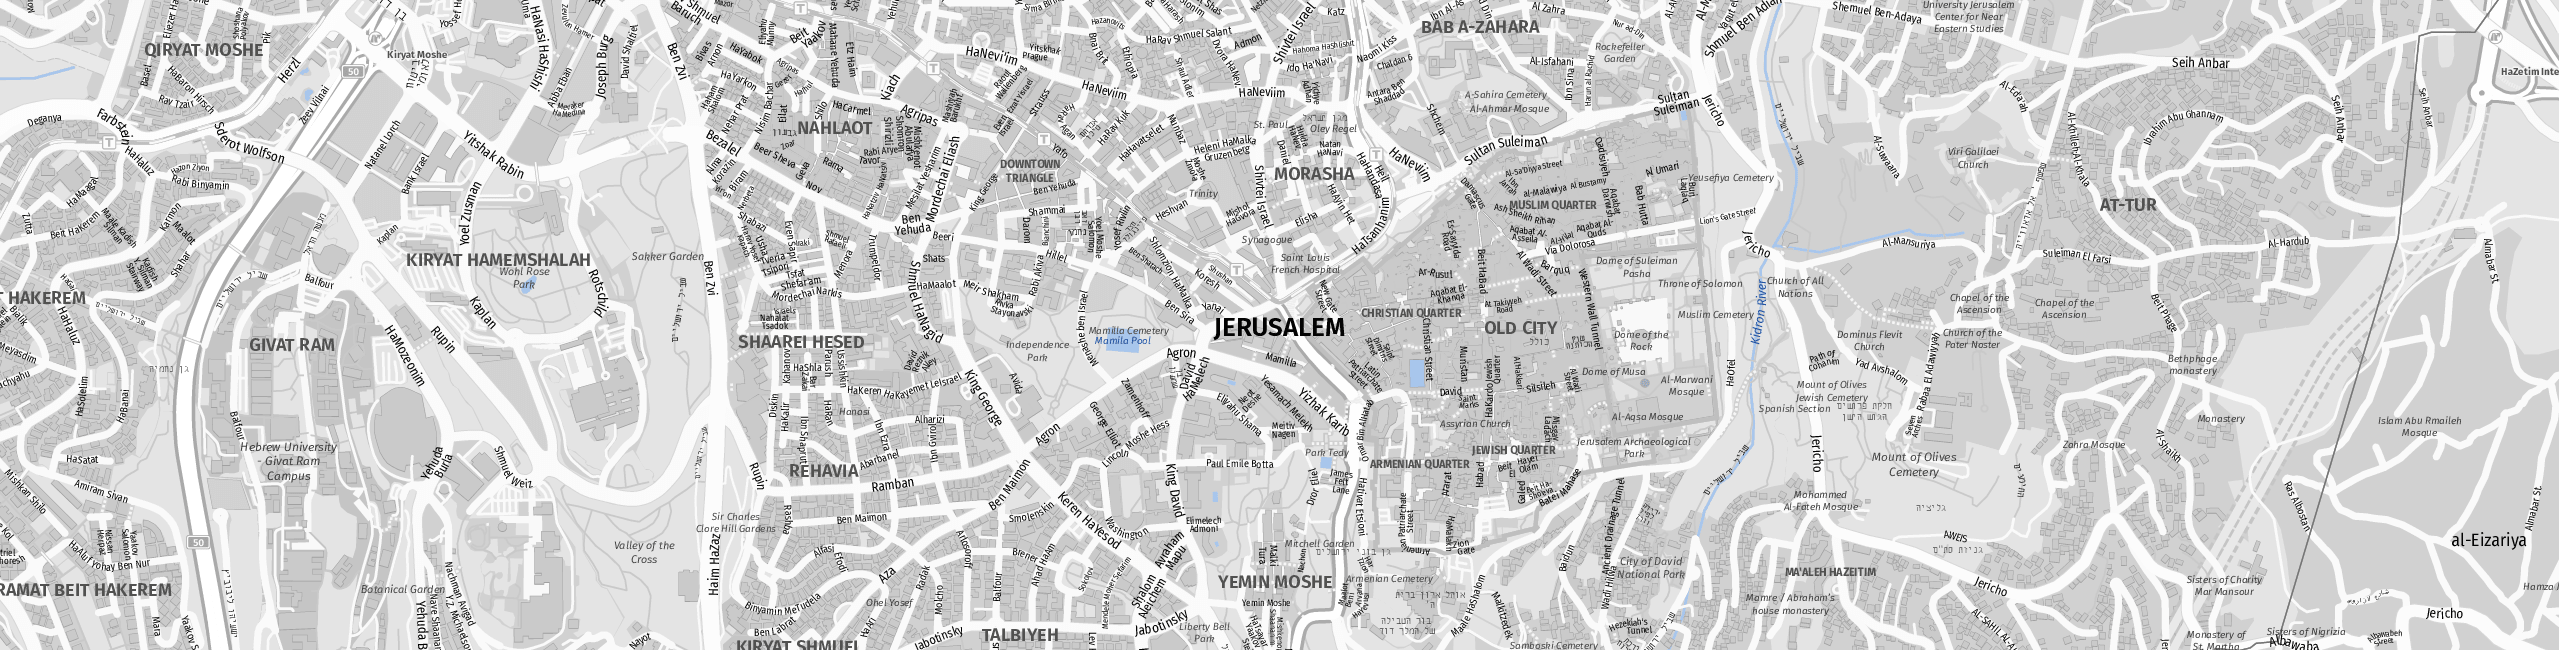 Stadtplan Jerusalem zum Downloaden.